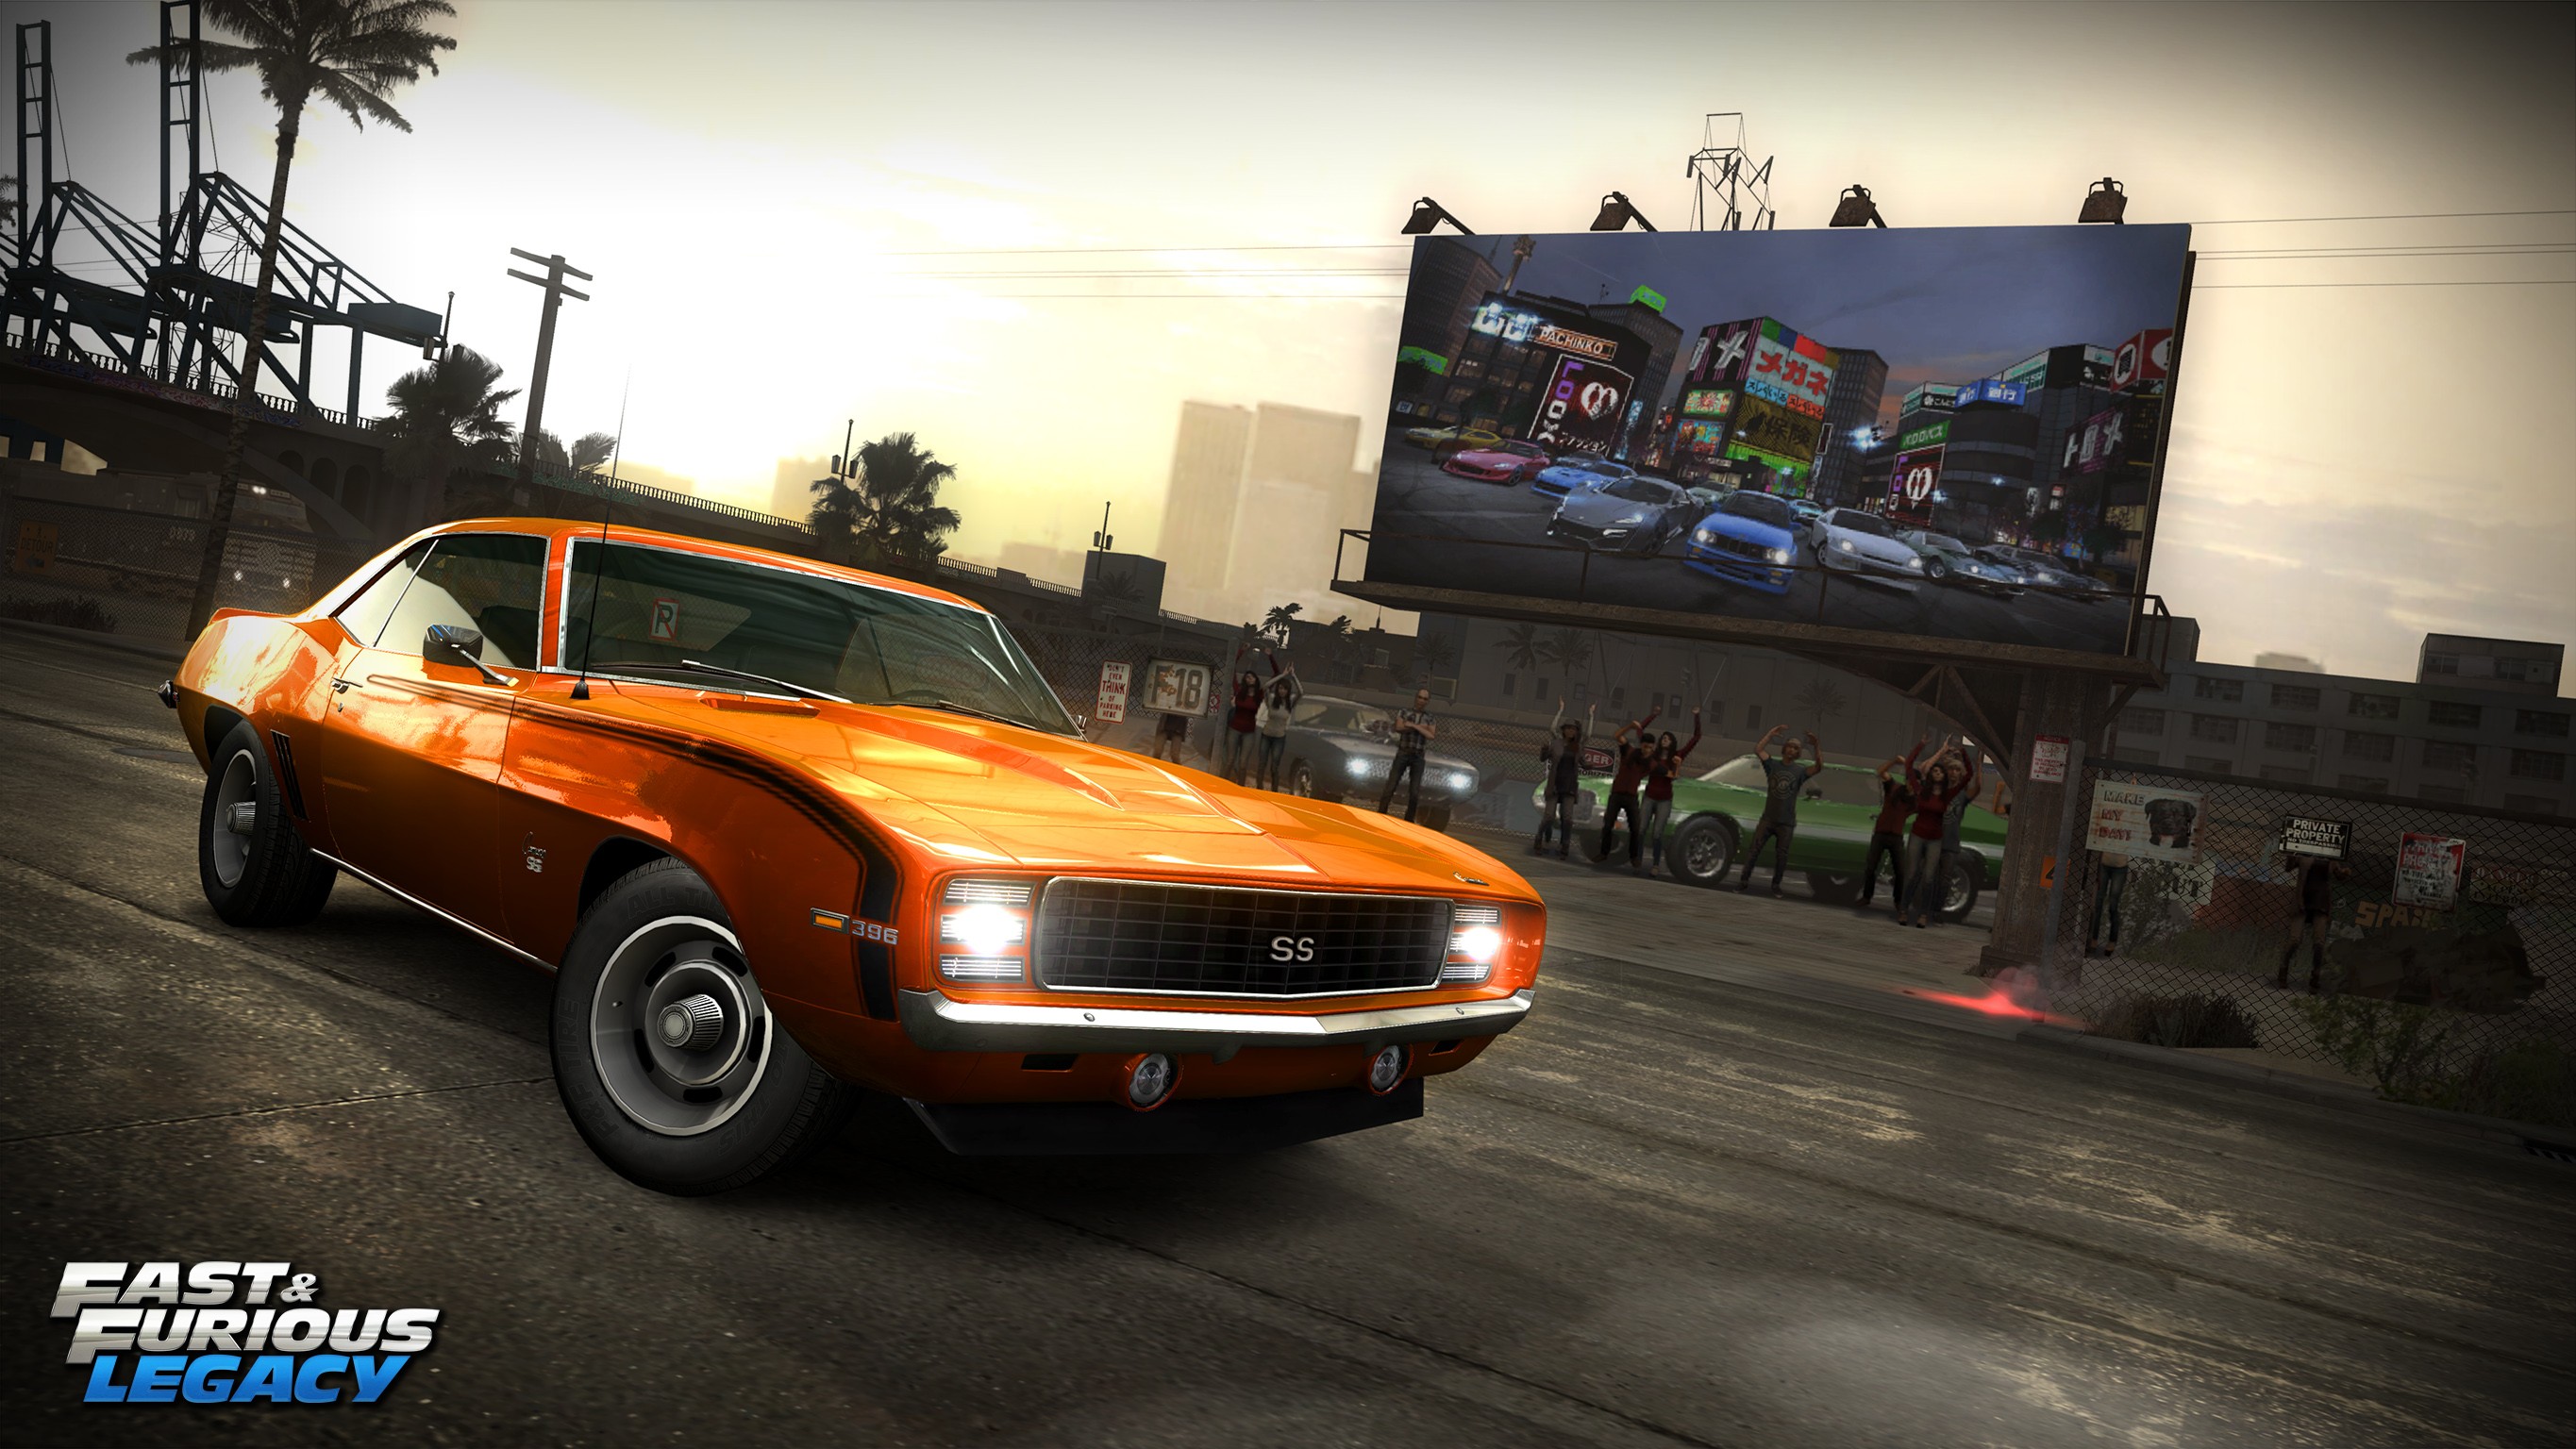 General 2730x1536 video games Fast & Furious: Legacy car vehicle orange cars PC gaming